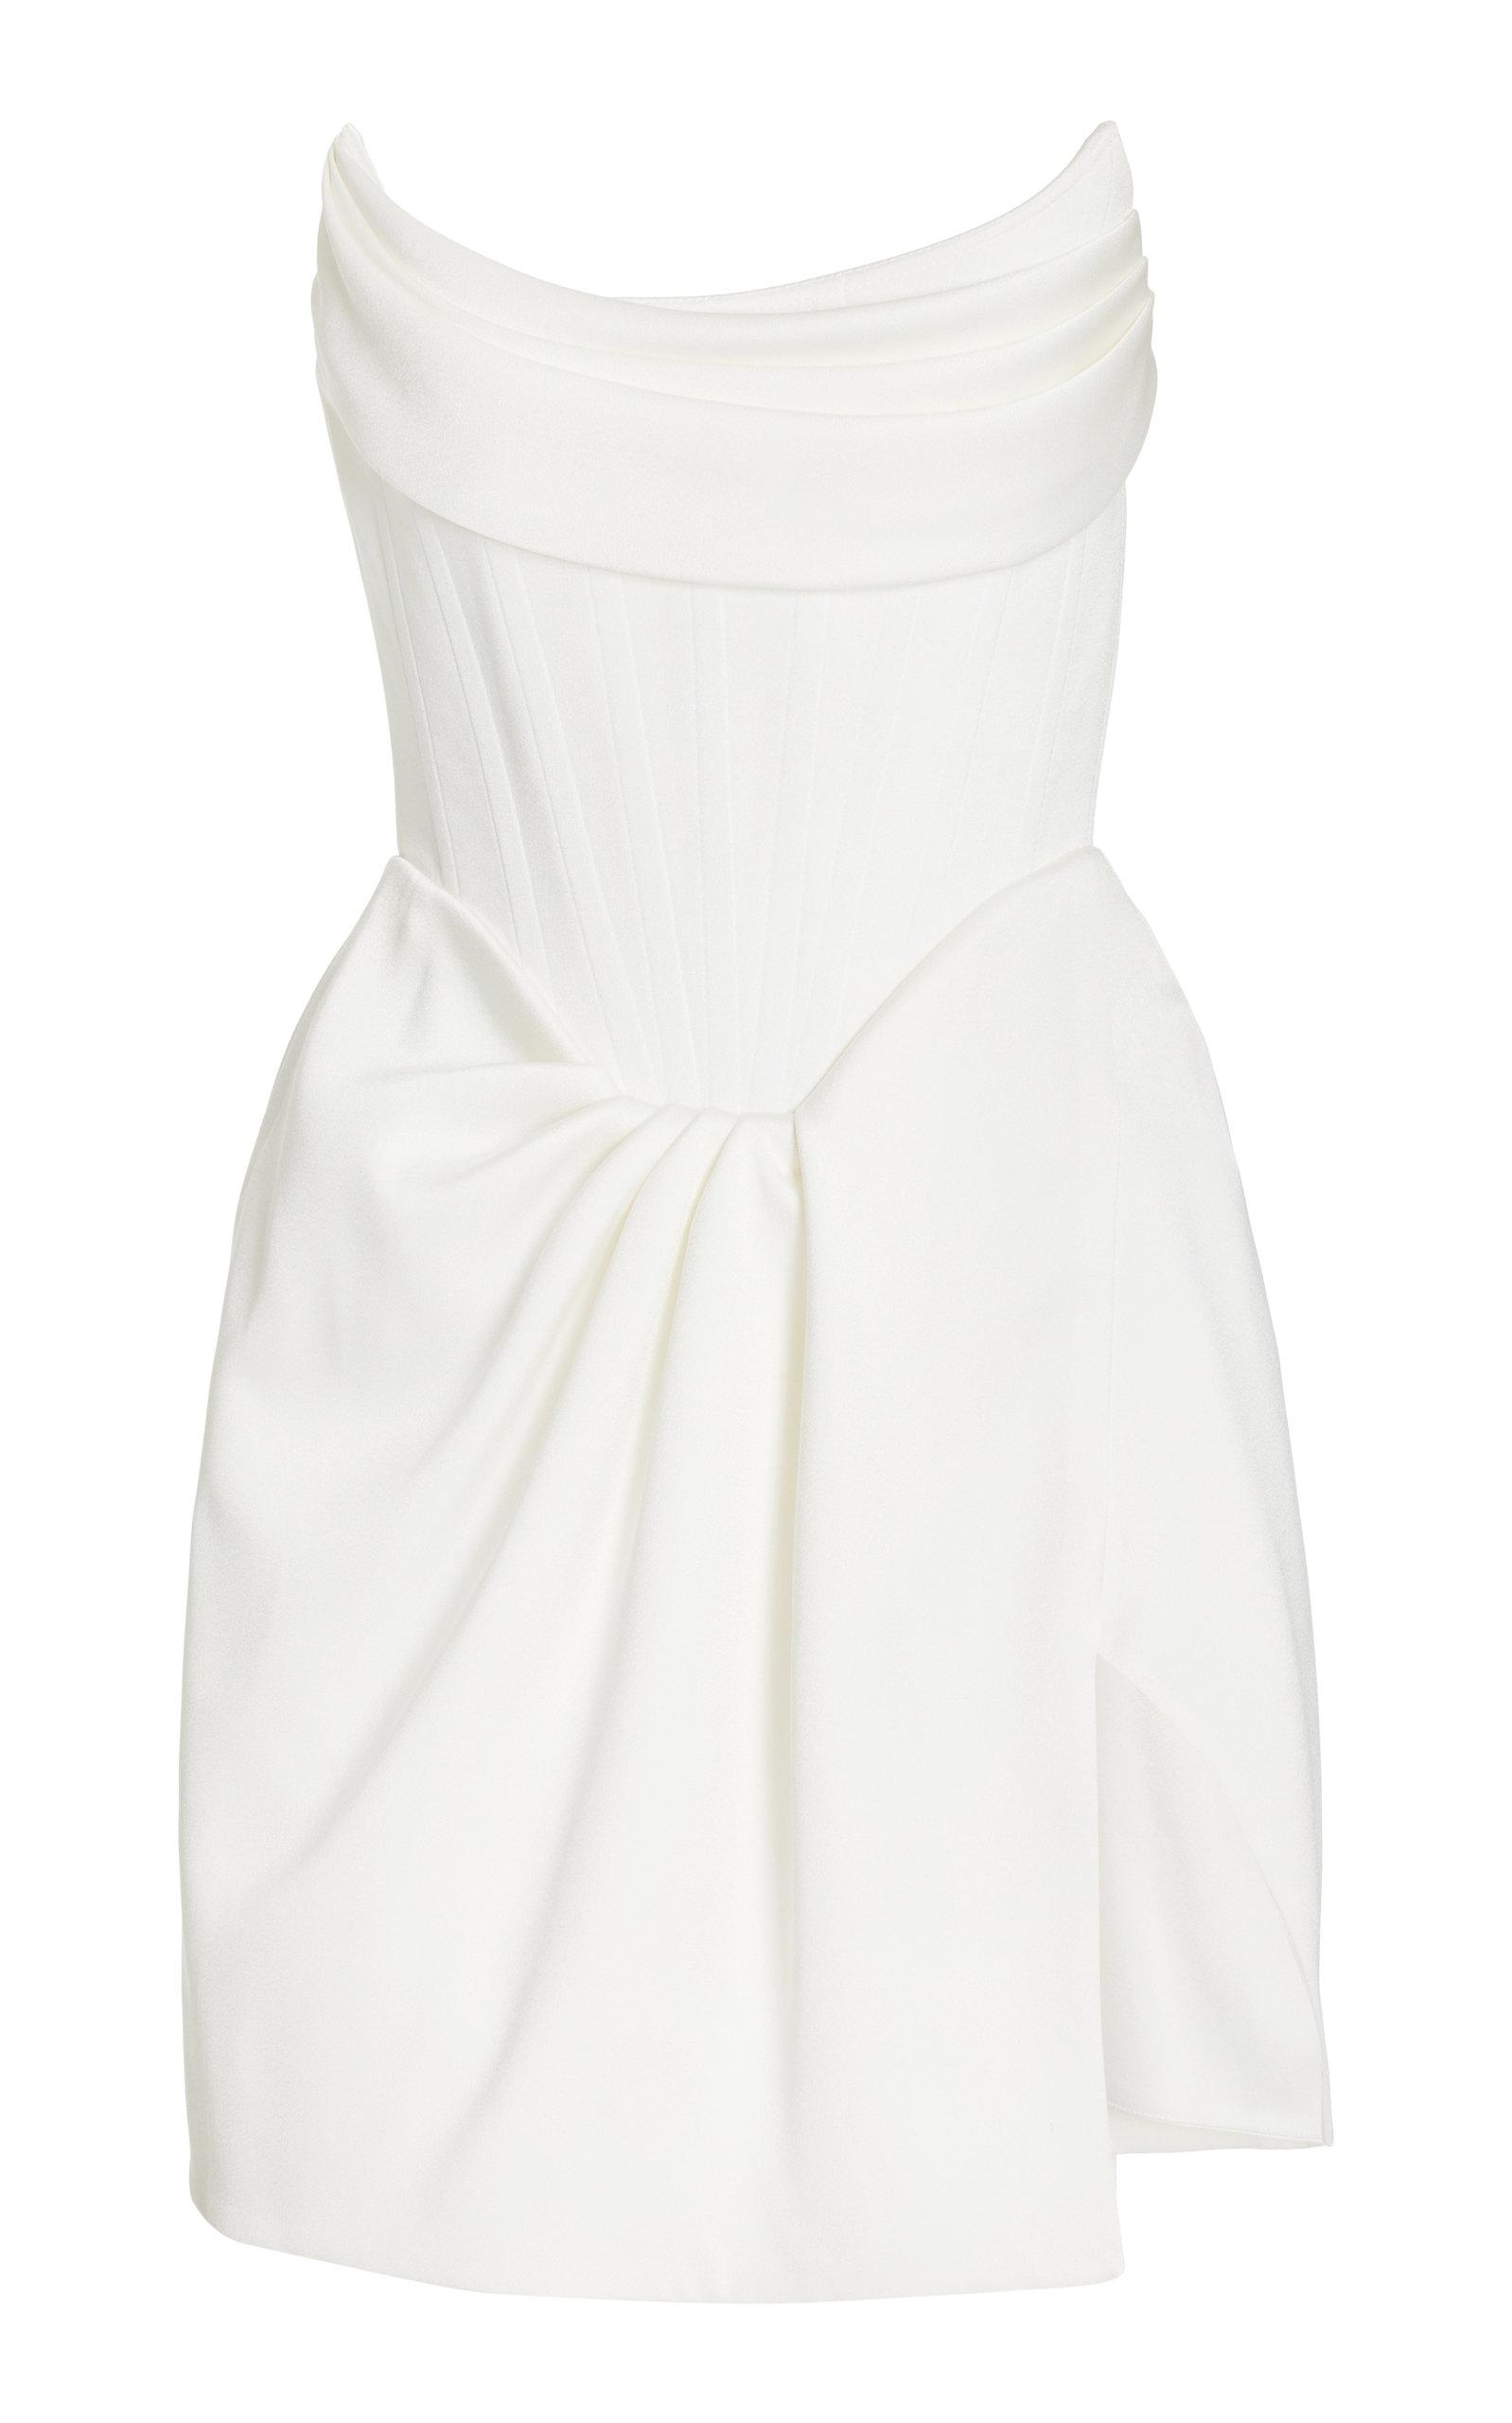 Alex Perry Audra Draped Satin Mini Dress in White | Lyst